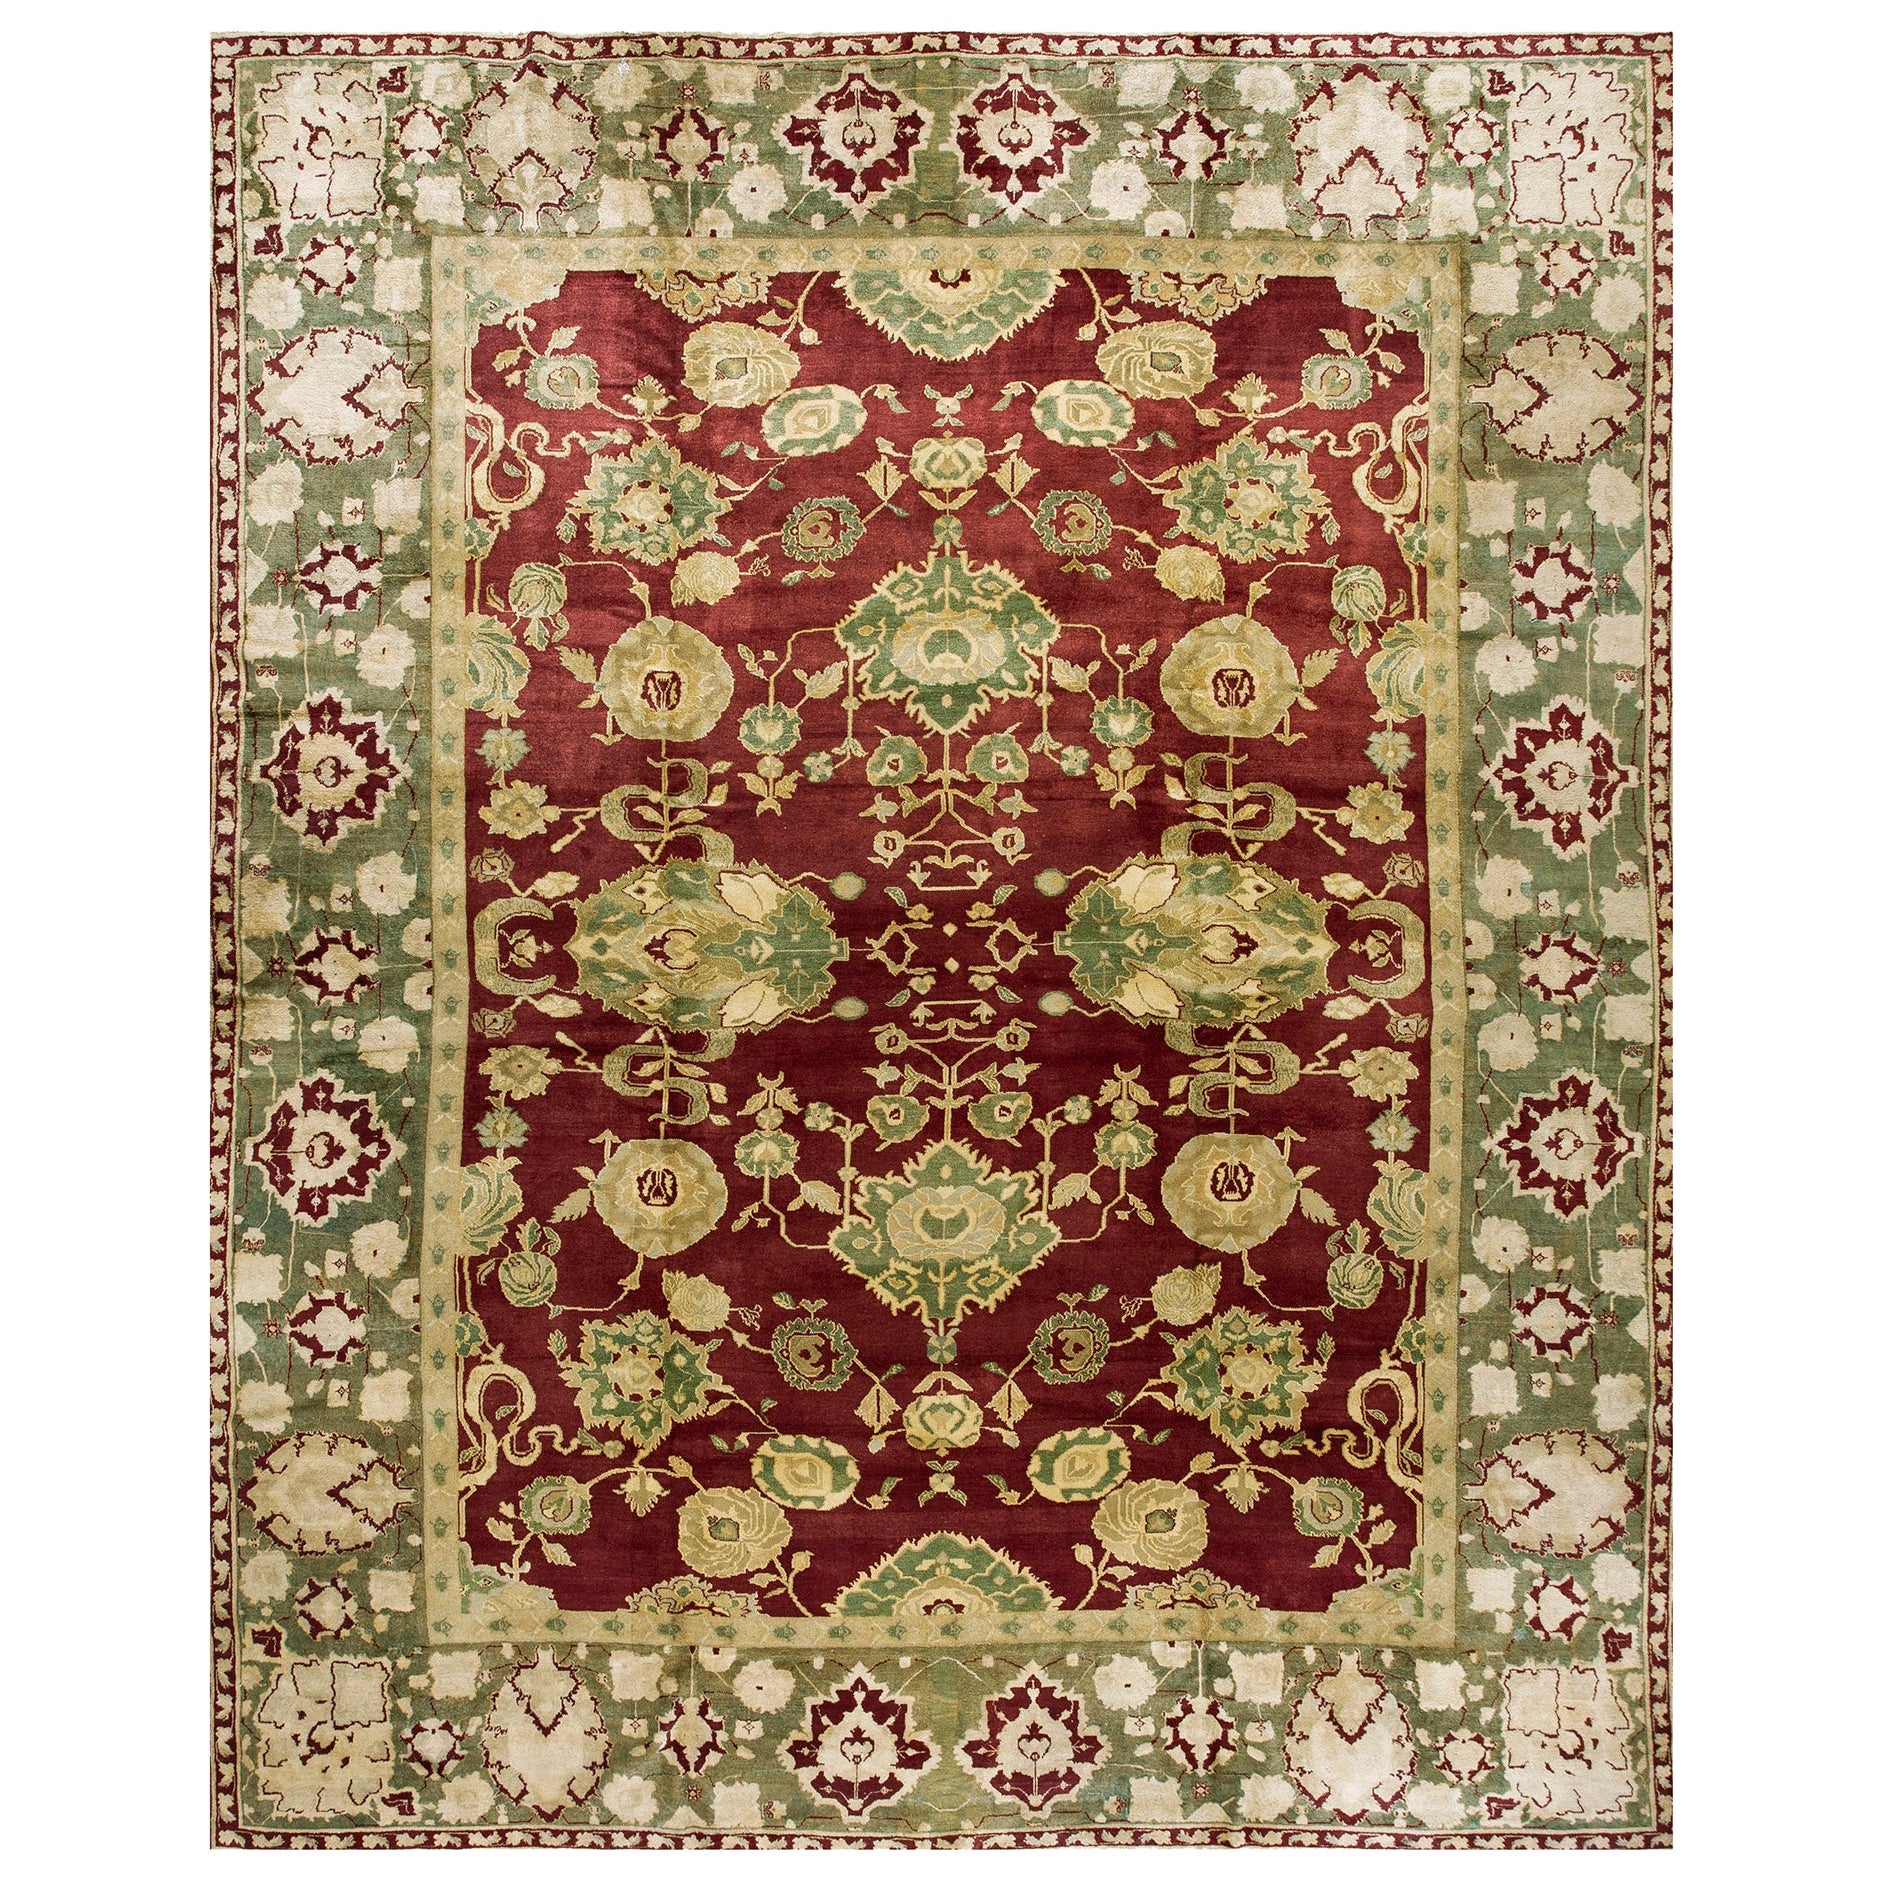 19th Century N. Indian Agra Carpet ( 11'4" x 14'6" - 345 x 442 )